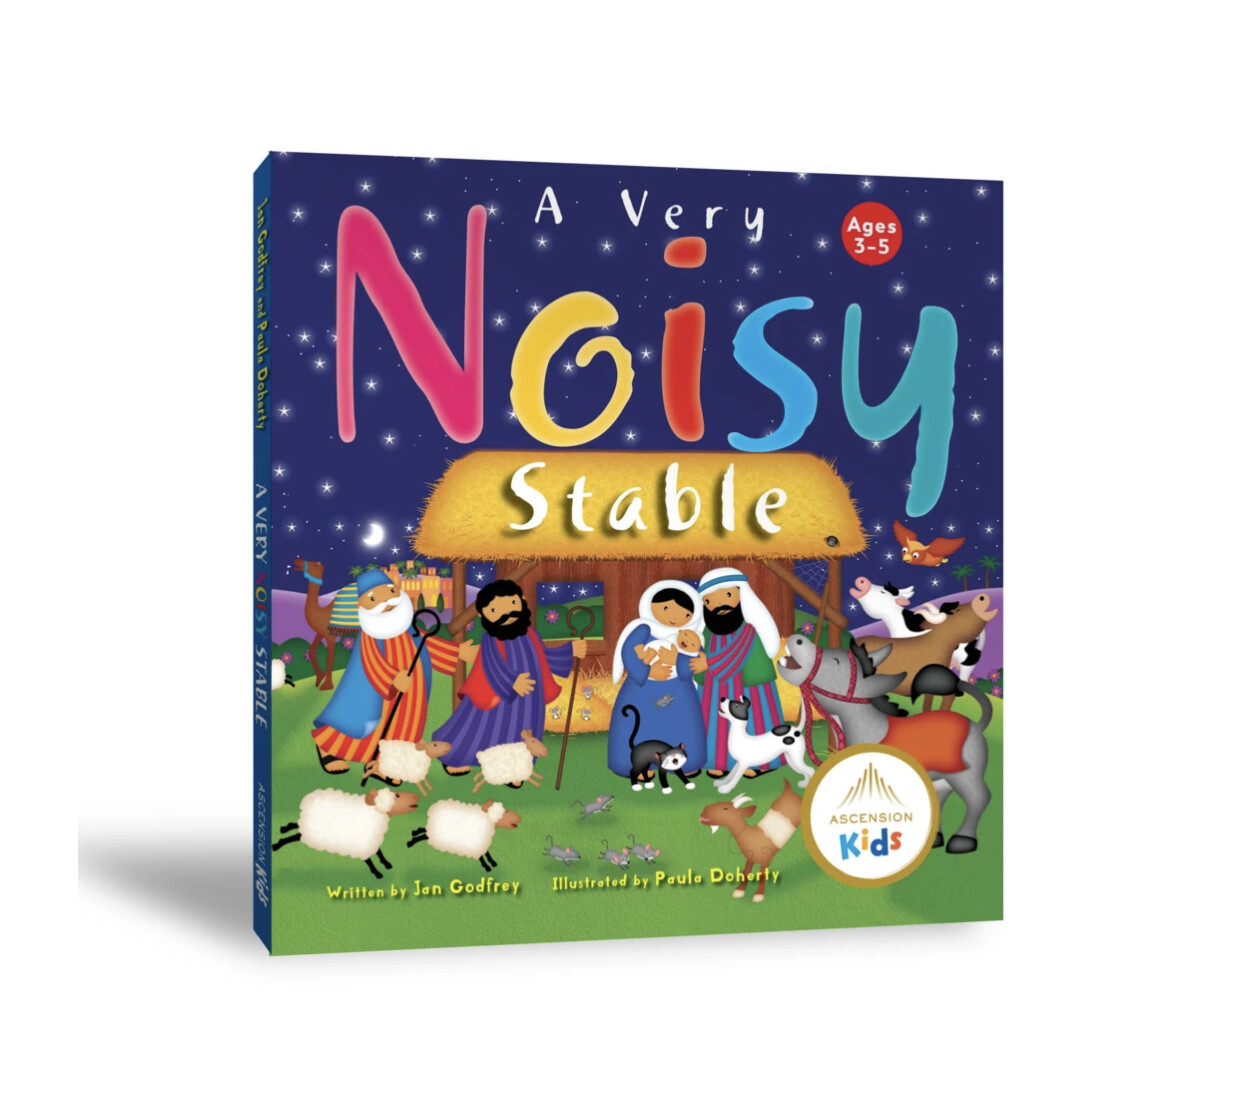 A Very Noisy Stable by Jan Godfrey